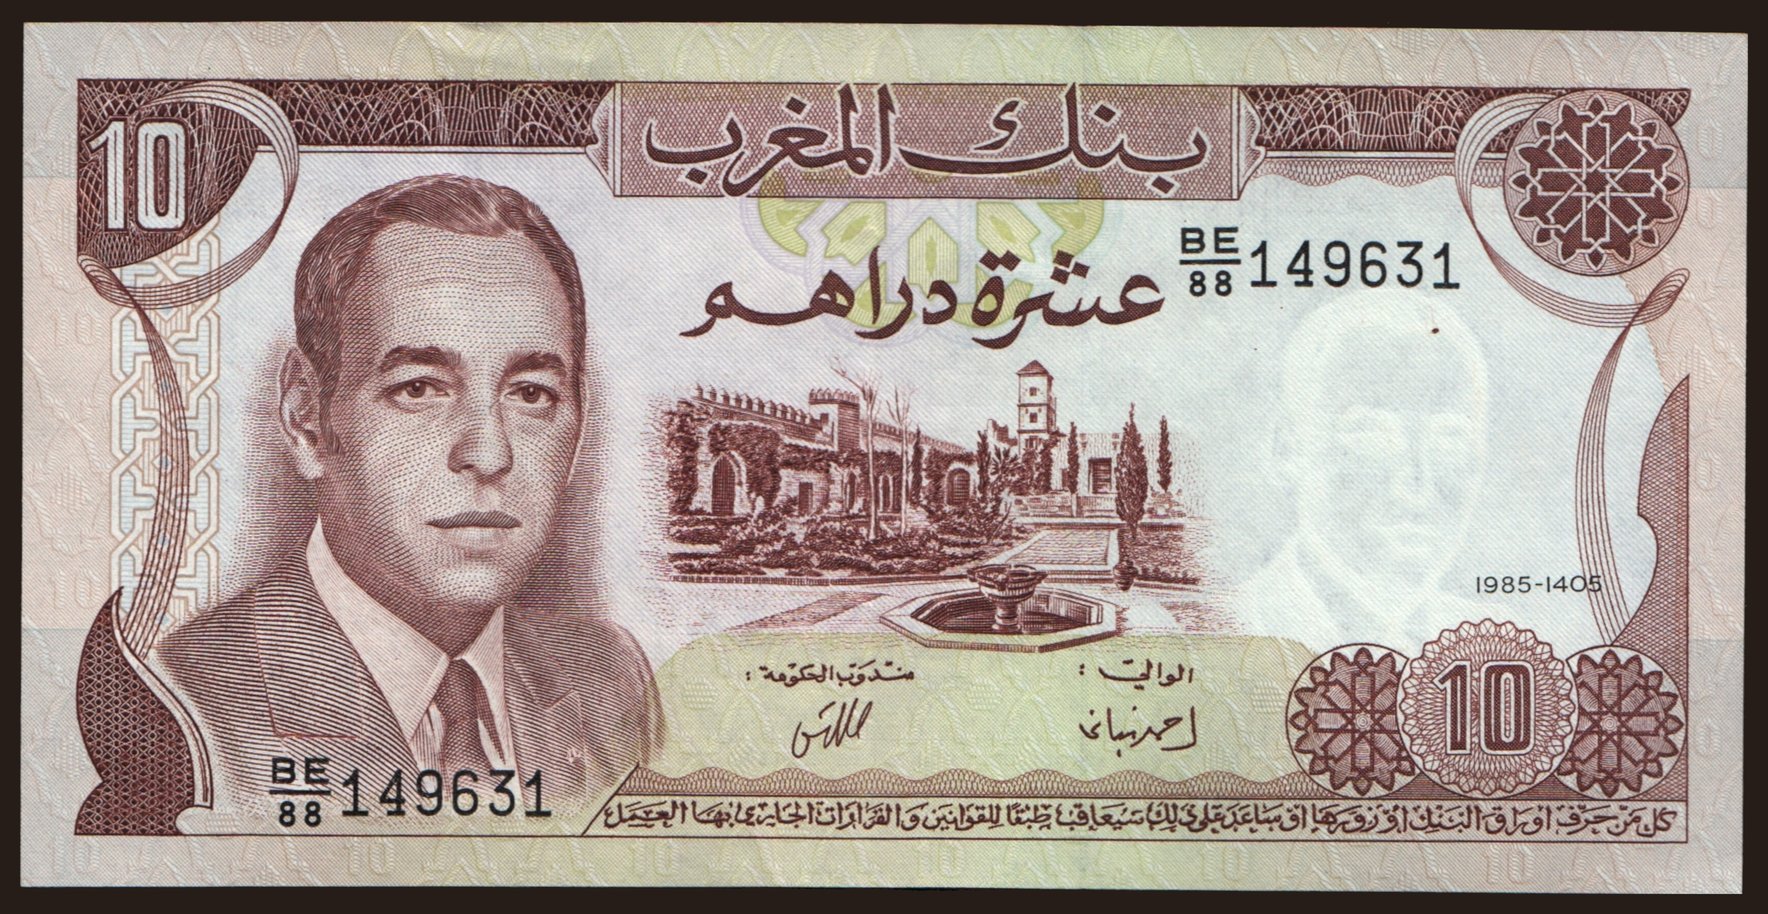 10 dirhams, 1985